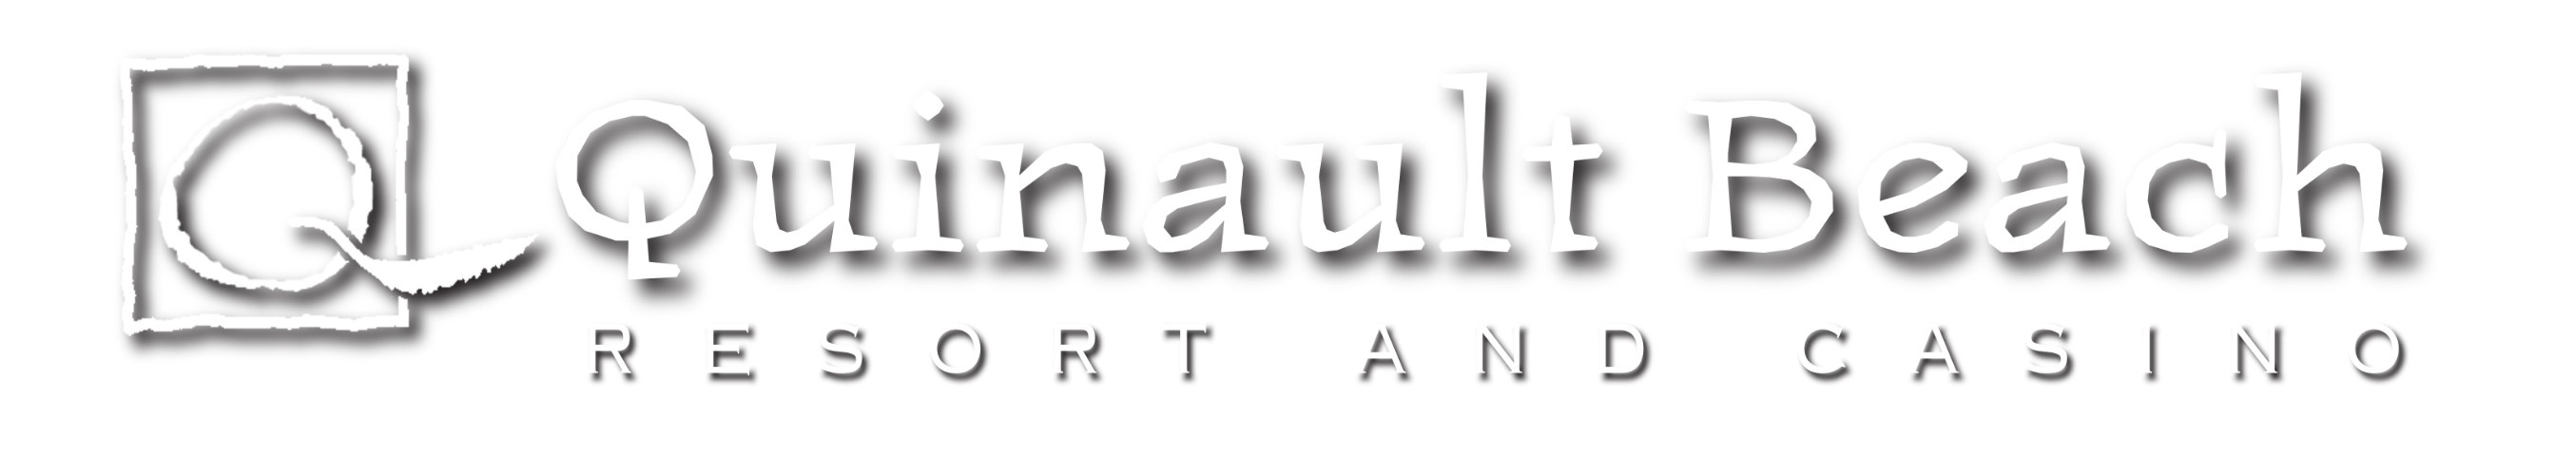 Logo for Quinault Beach Resort and Casino